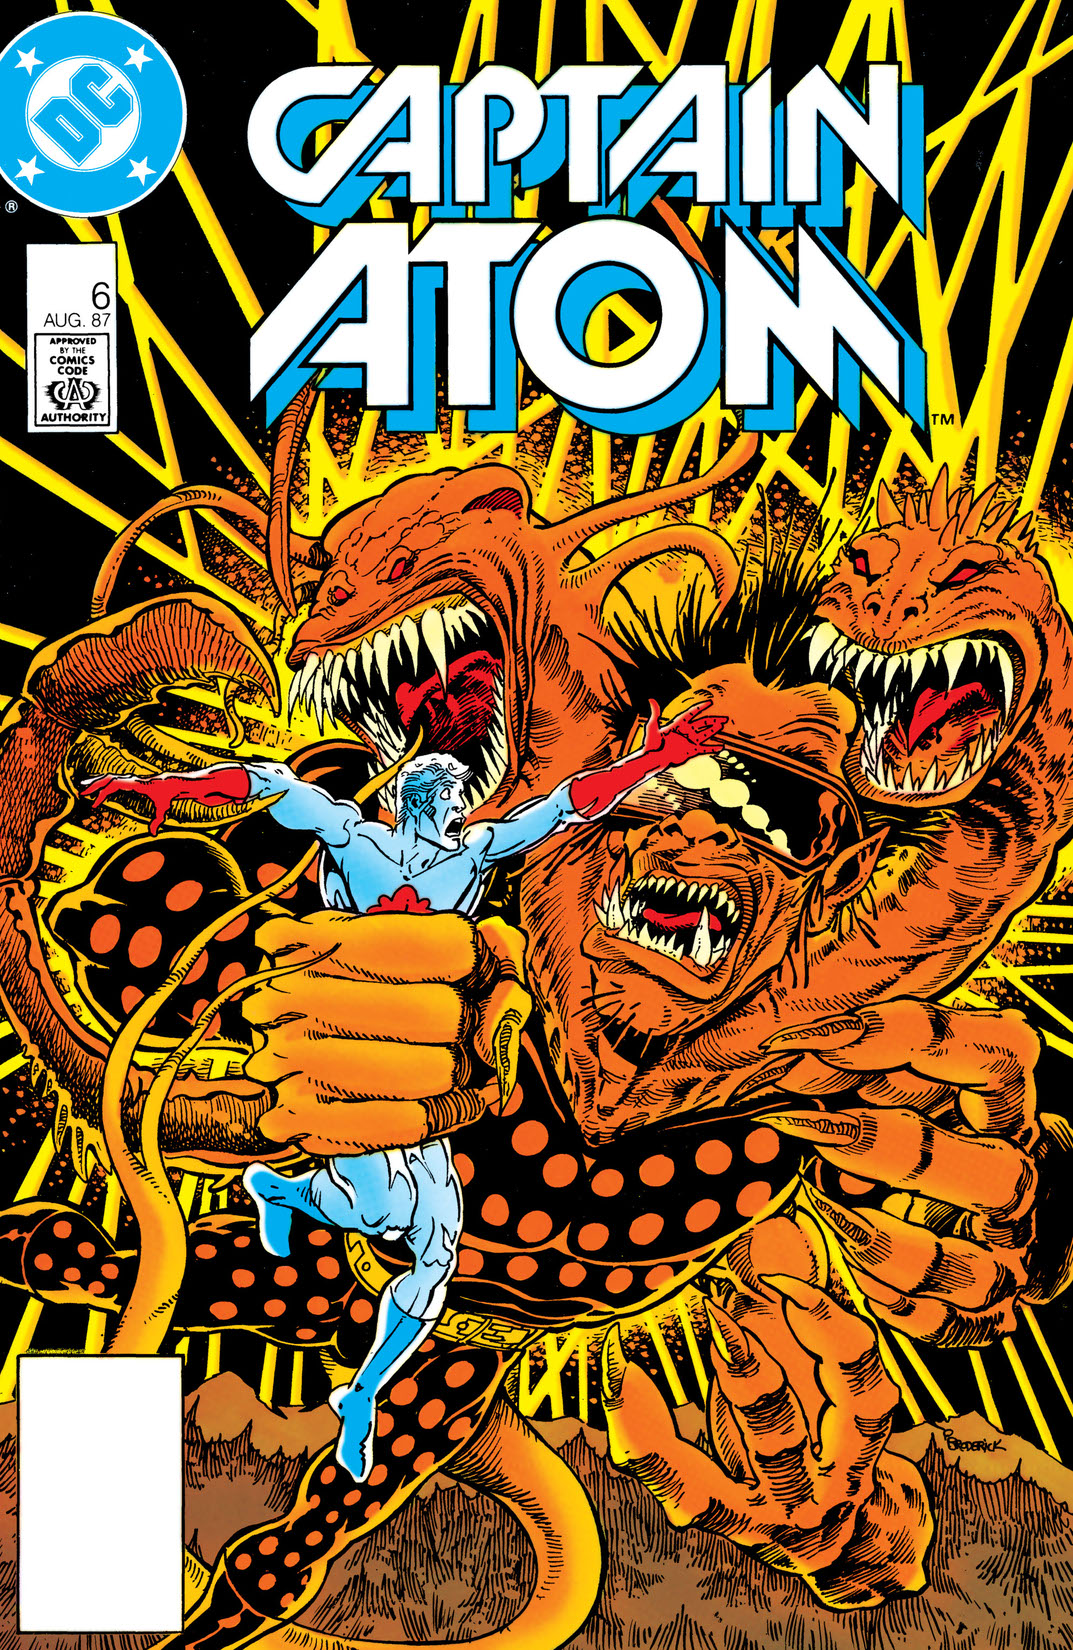 Captain Atom (1986-1992) #6 preview images